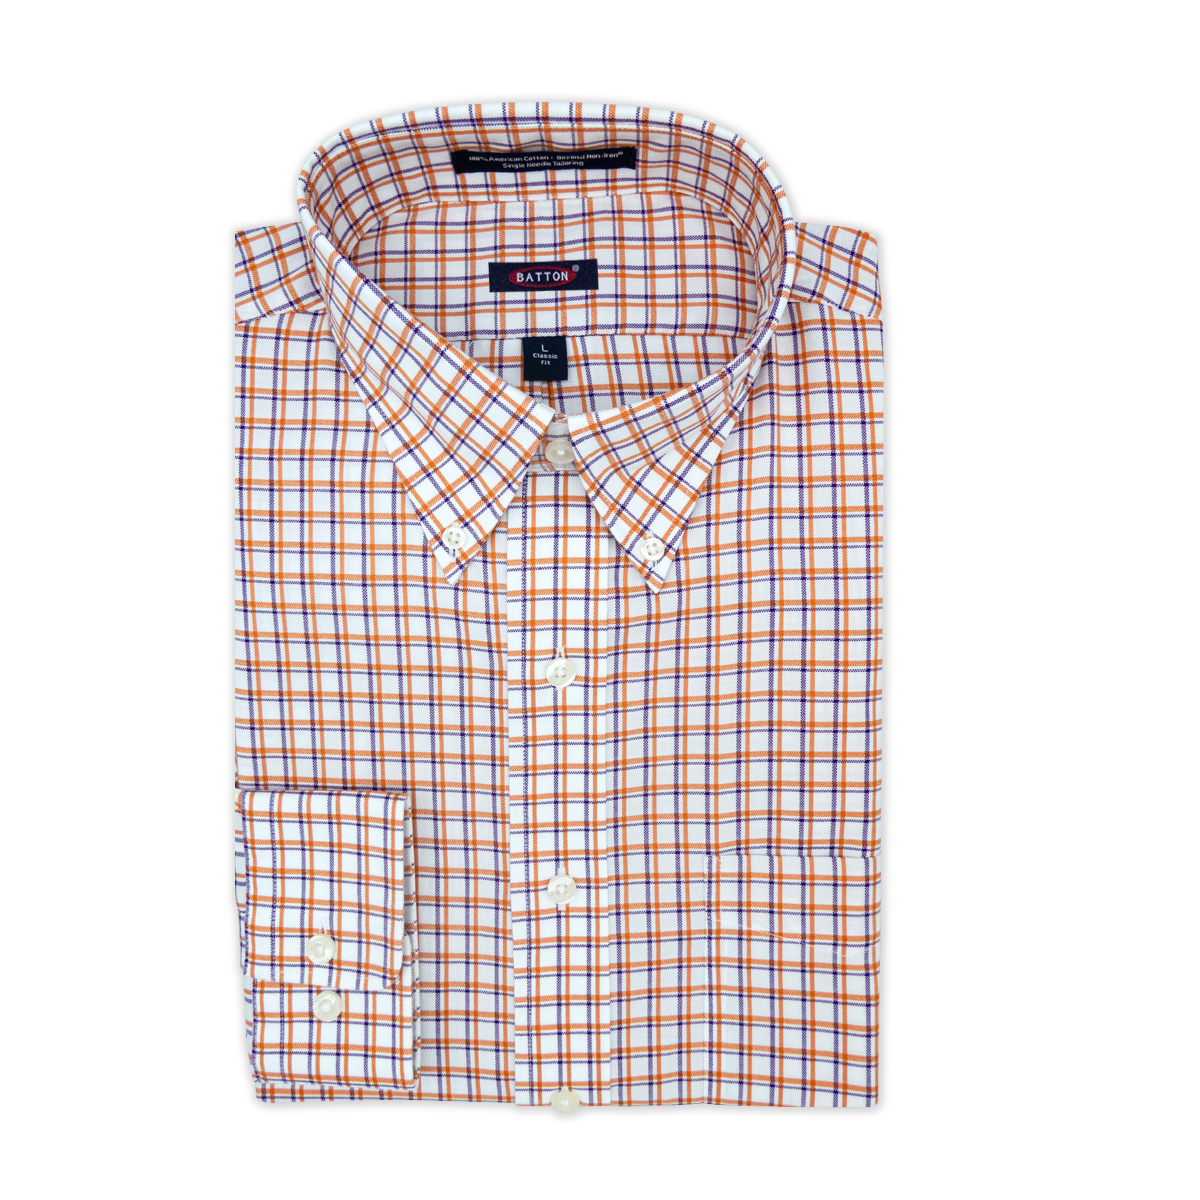 'Clemson' Orange and Purple Check Long Sleeve Beyond Non-Iron® Cotton Twill Sport Shirt by Batton